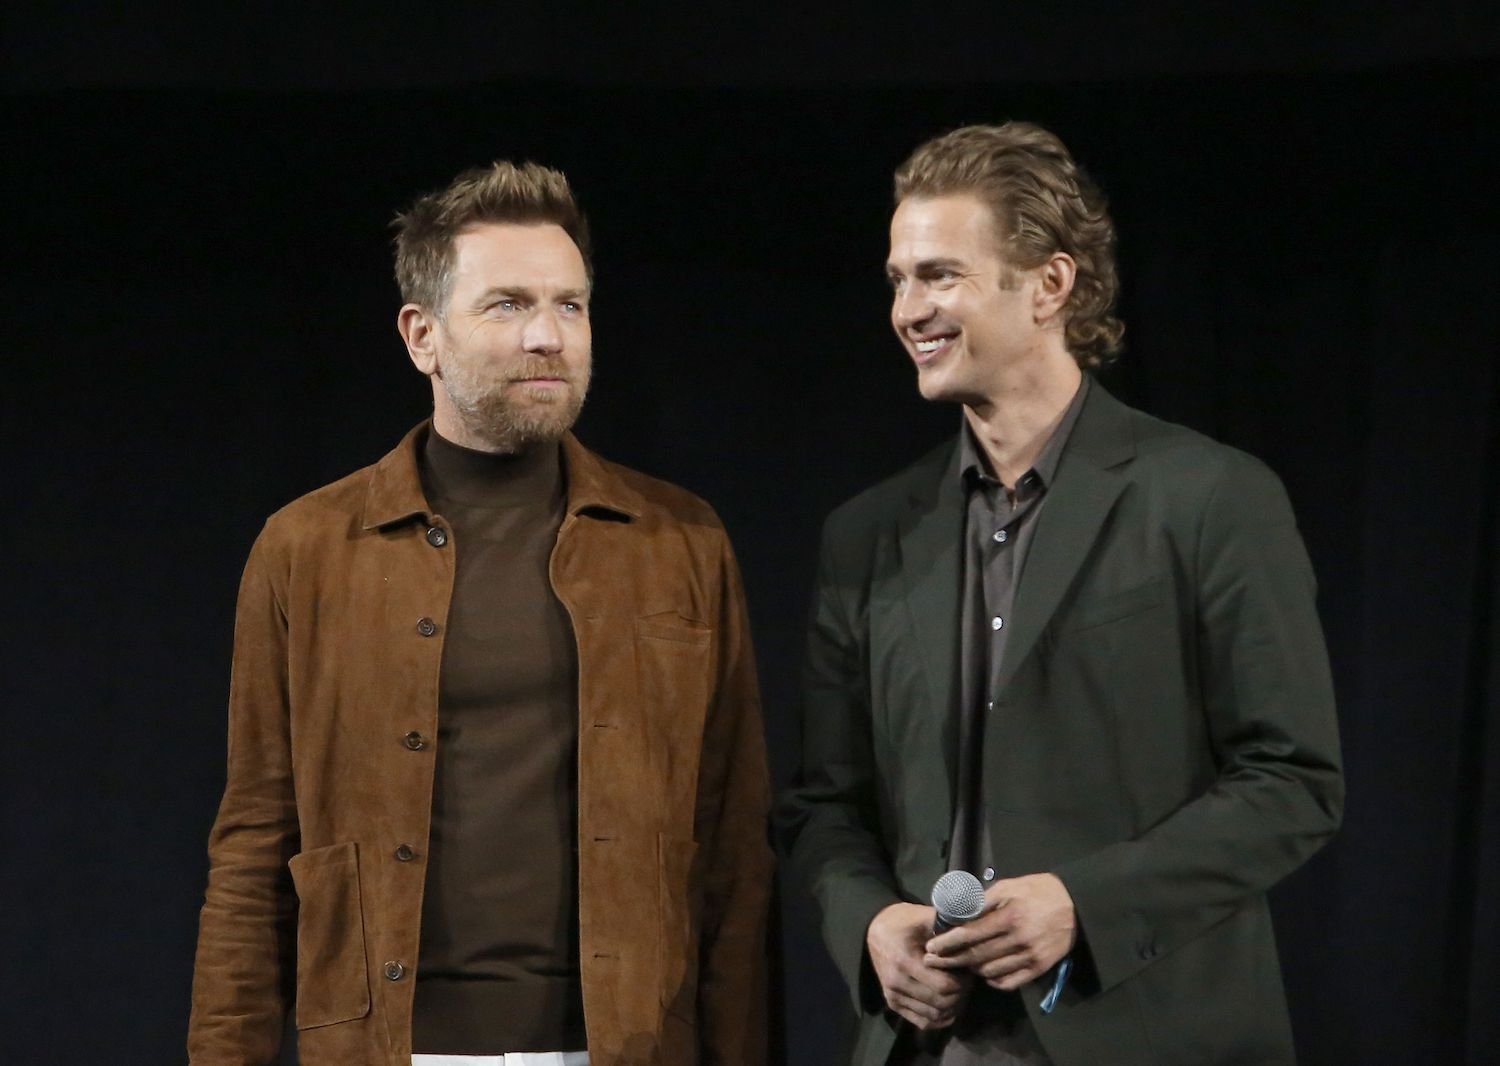 Ewan McGregor and Hayden Christensen from the 'Obi-Wan Kenobi' series speaking on stage